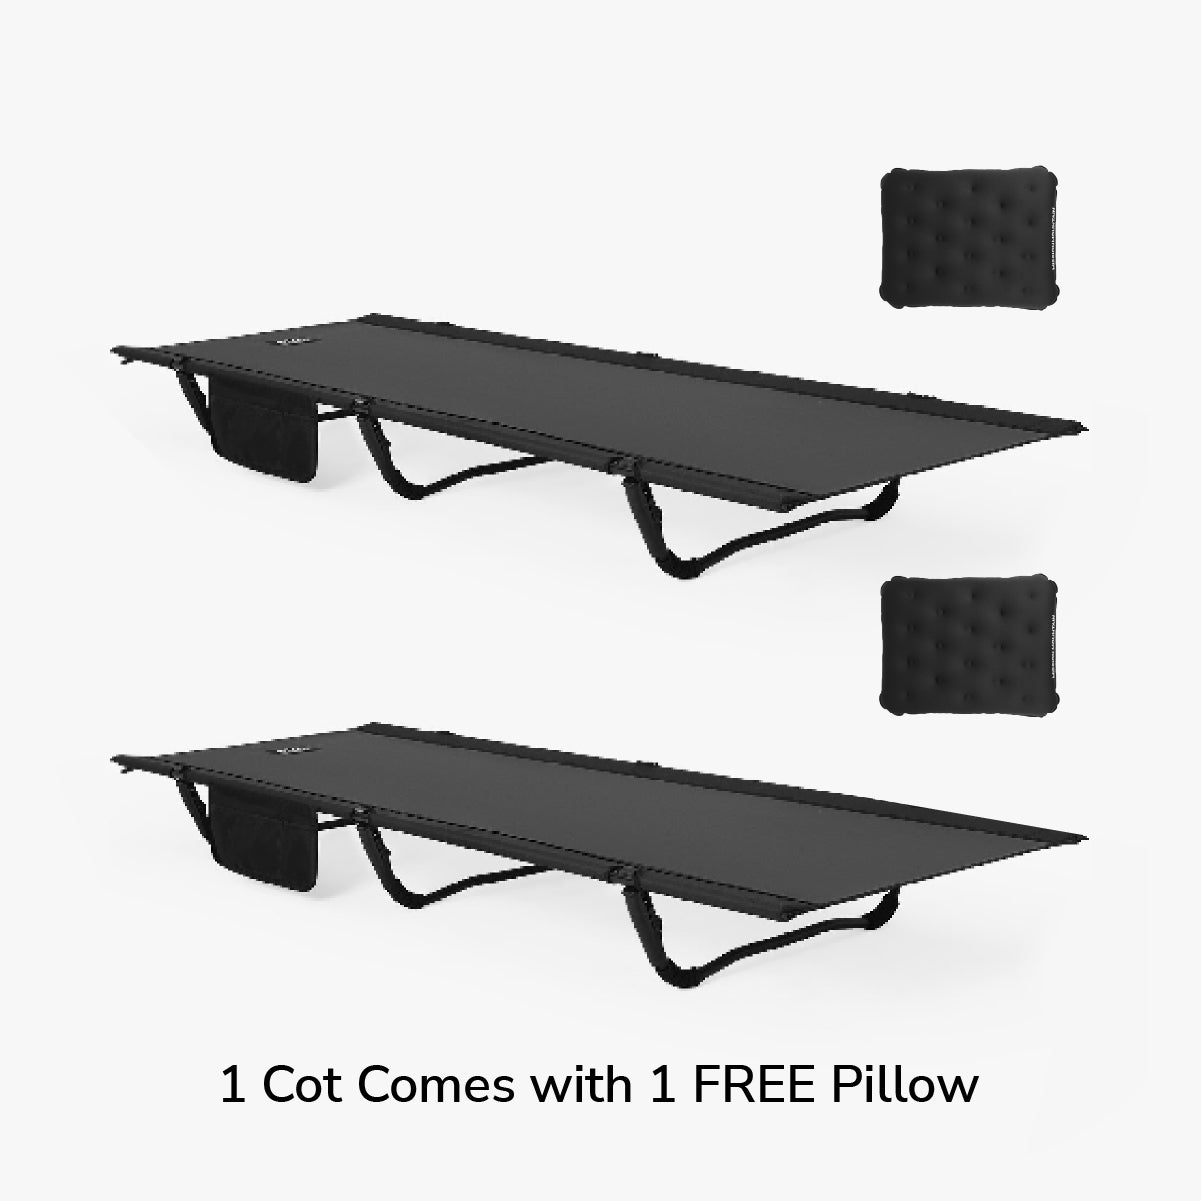 A4 Ultralight & Versatile Cot with Pillow